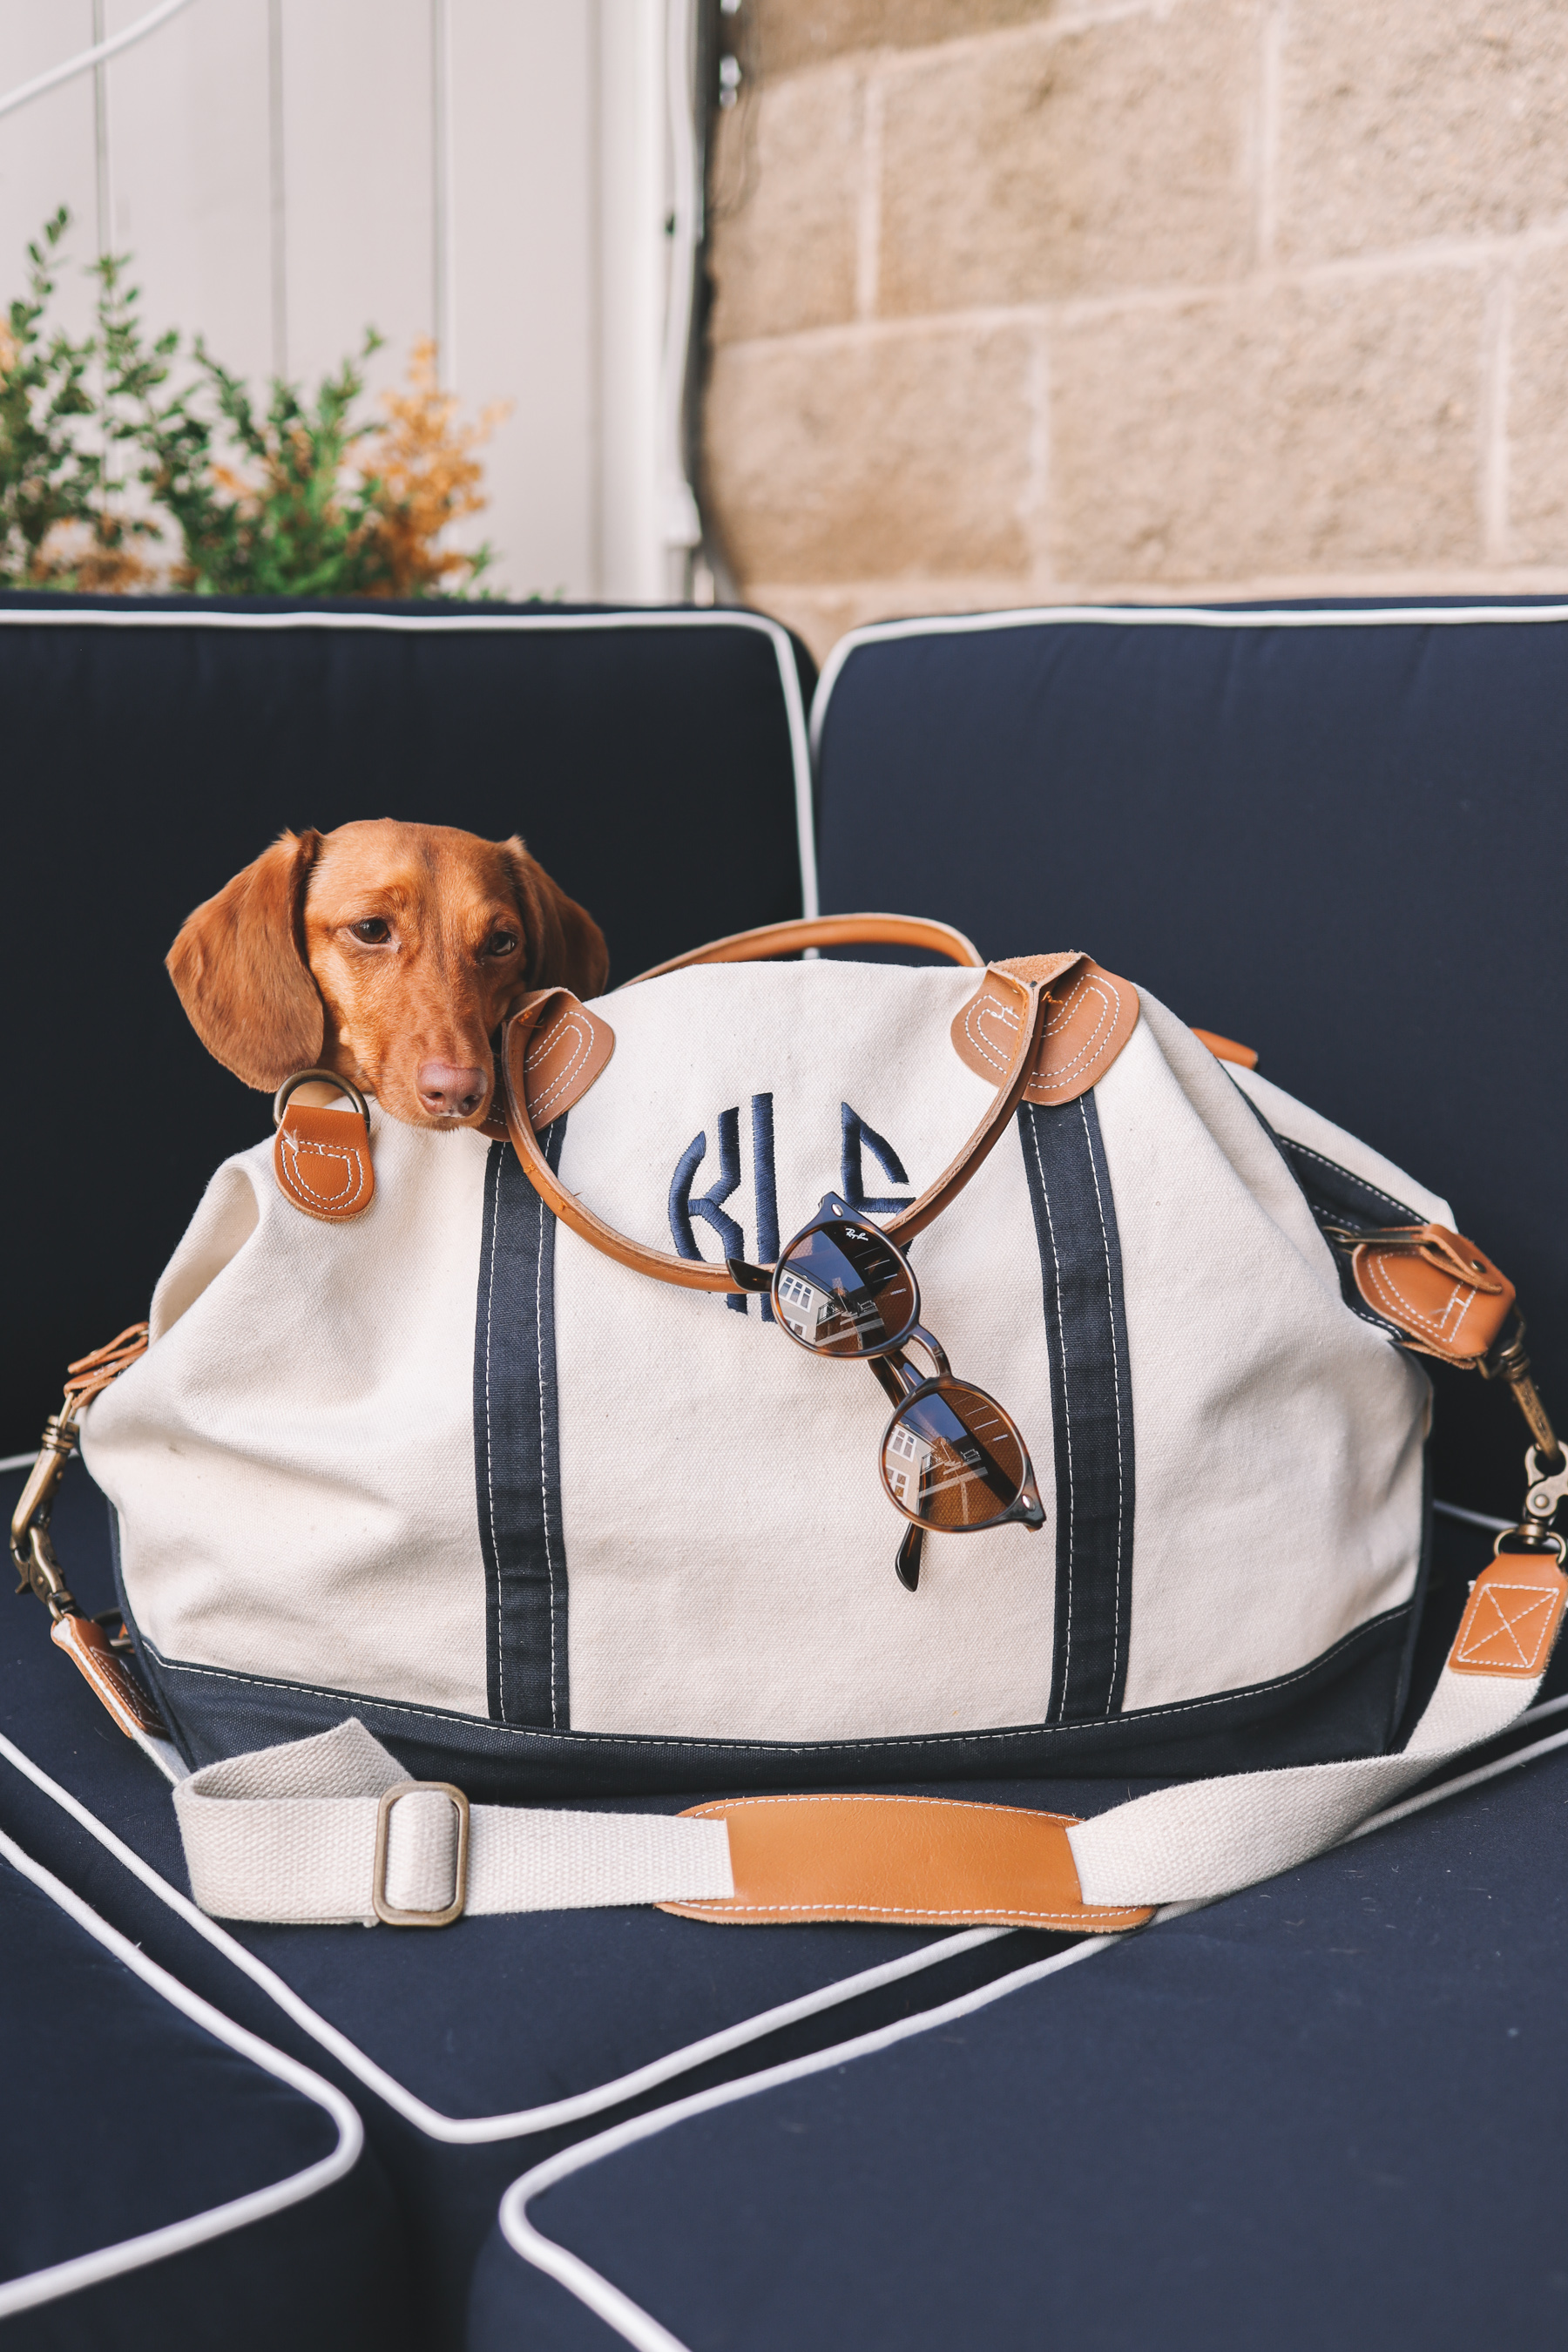 a dog in a bag